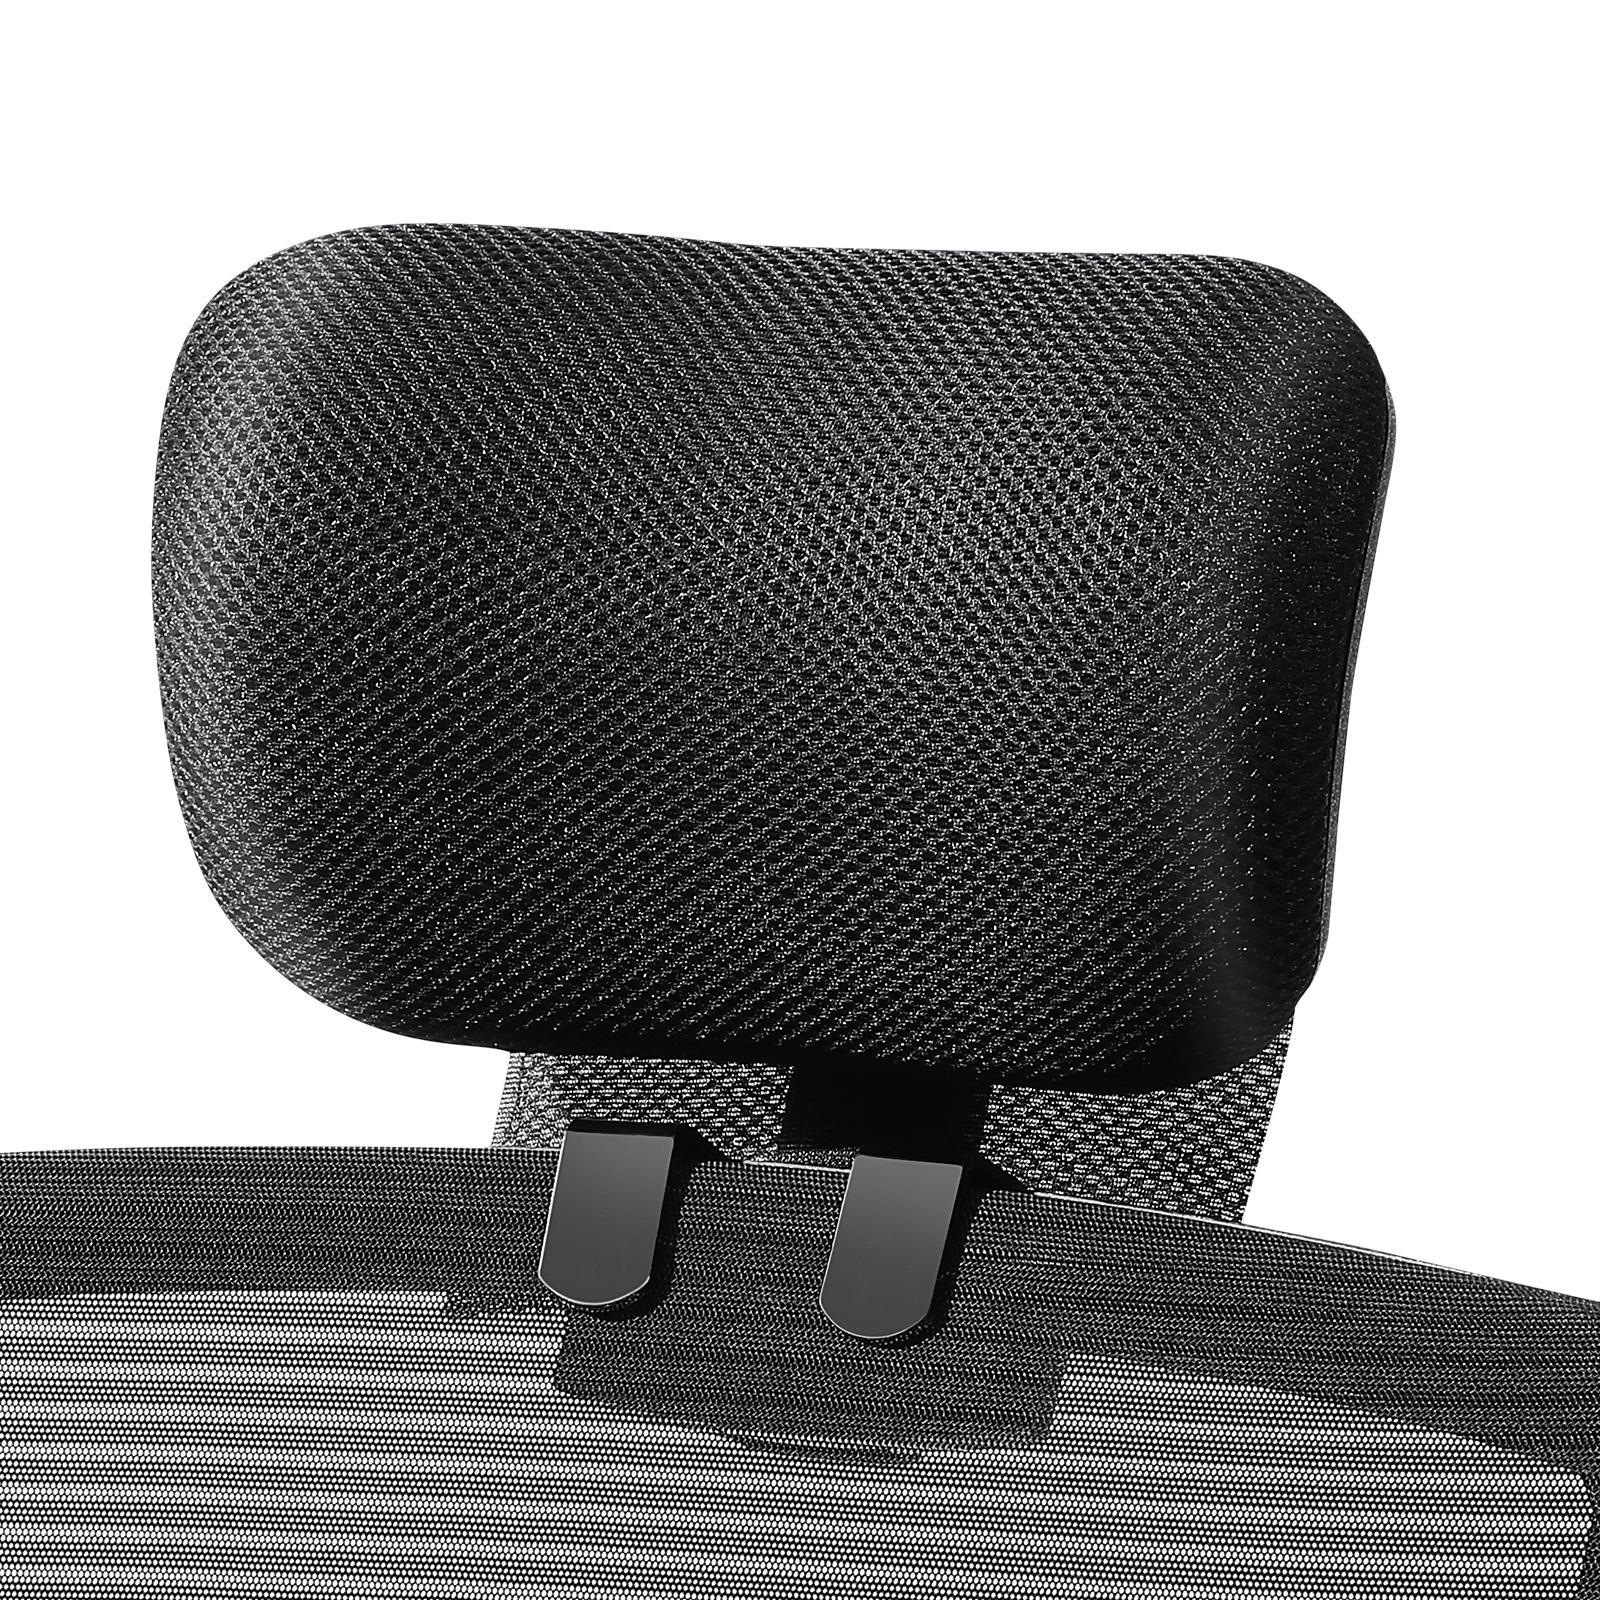 Drafting Chair Tall Office Standing Desk Ergonomic Pro Gaming Chairs Adjustable Desks Headrest Work